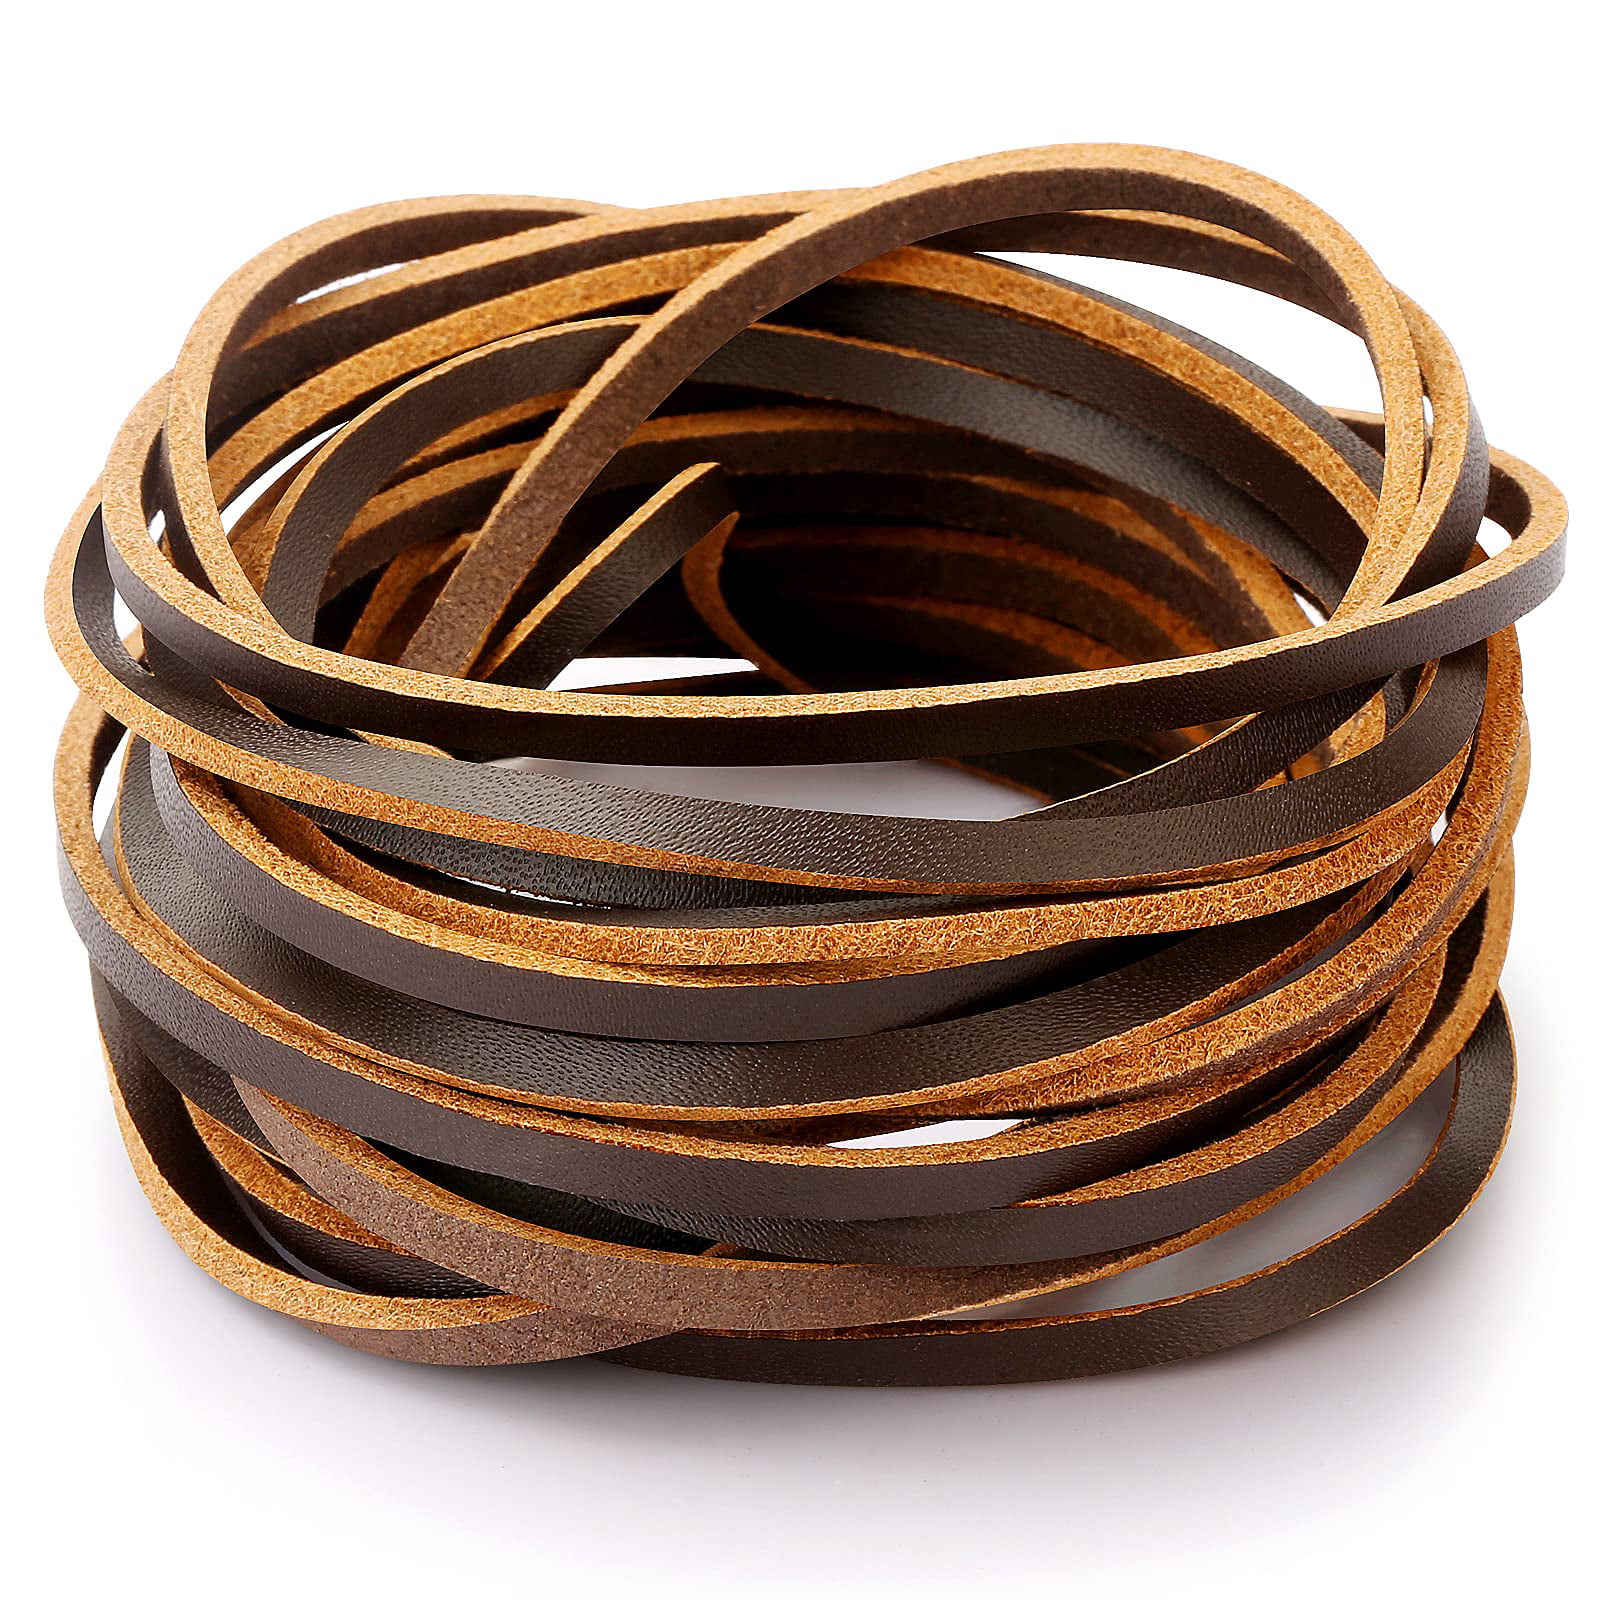 LolliBeads (TM) 3mm Flat Genuine Leather Strip Cord Braiding String Dark  Brown Espresso (5 Yards) 3mm_5yards Flat_dark_brown